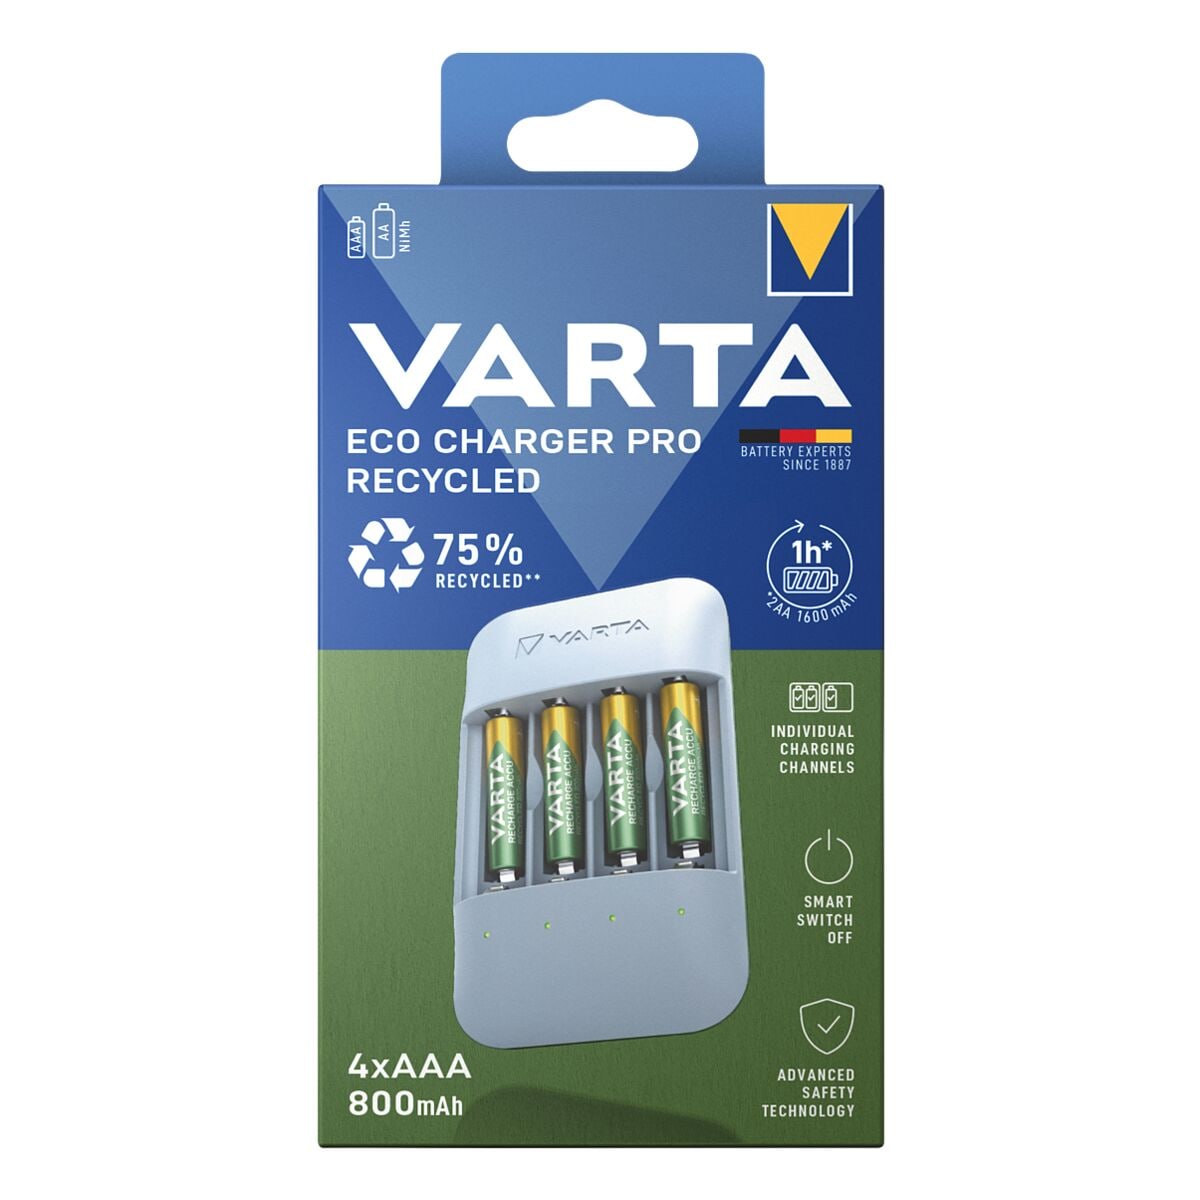 Varta Ladegert Eco Charger Pro Recycled mit 4x AAA-Akkus 800 mAh